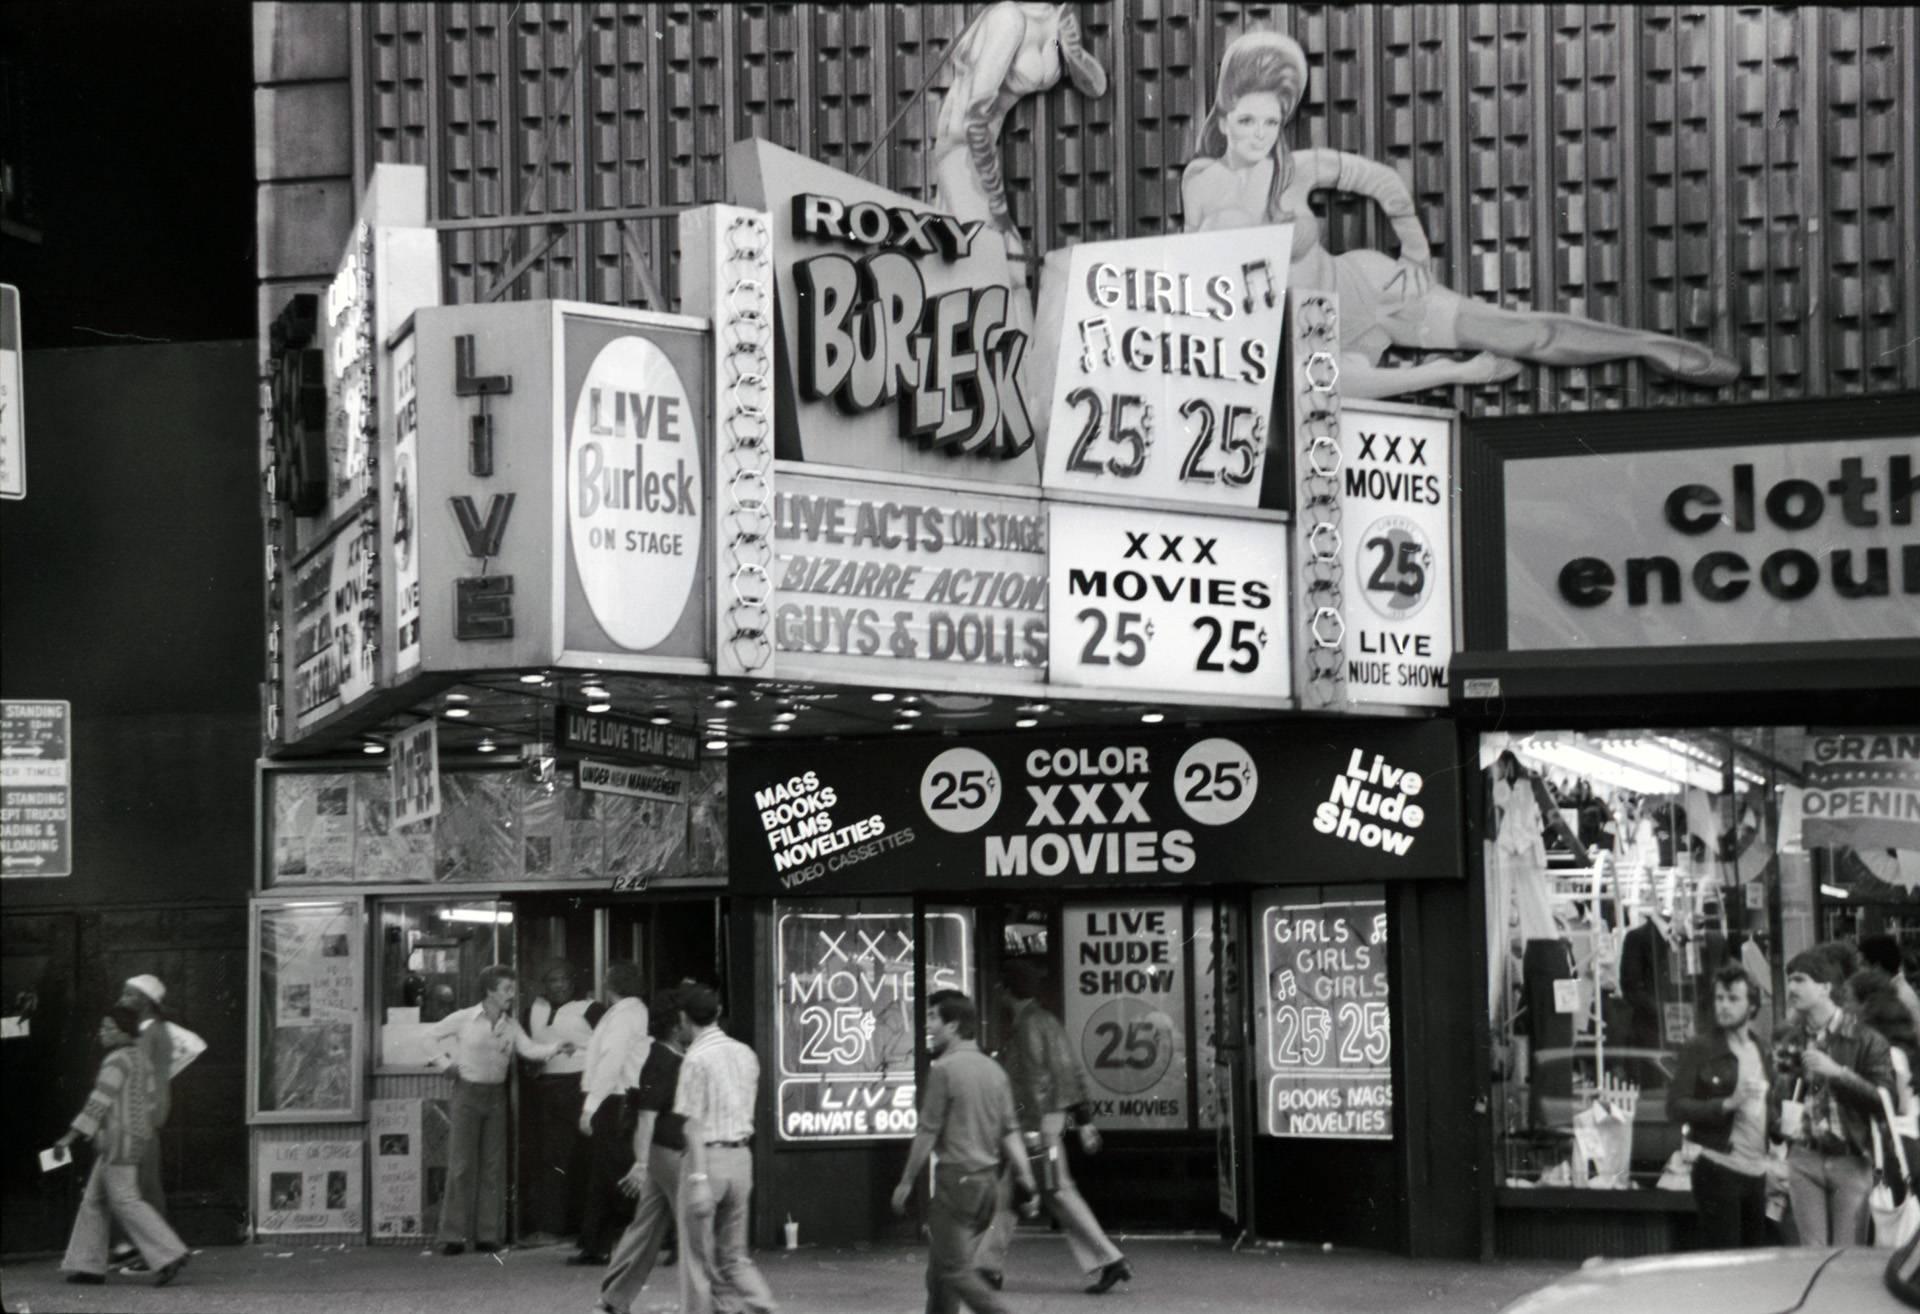 Black and White Photograph Fernando Natalici - Photographie du Times Square New York des années 1970  (photography de rue de New York) 